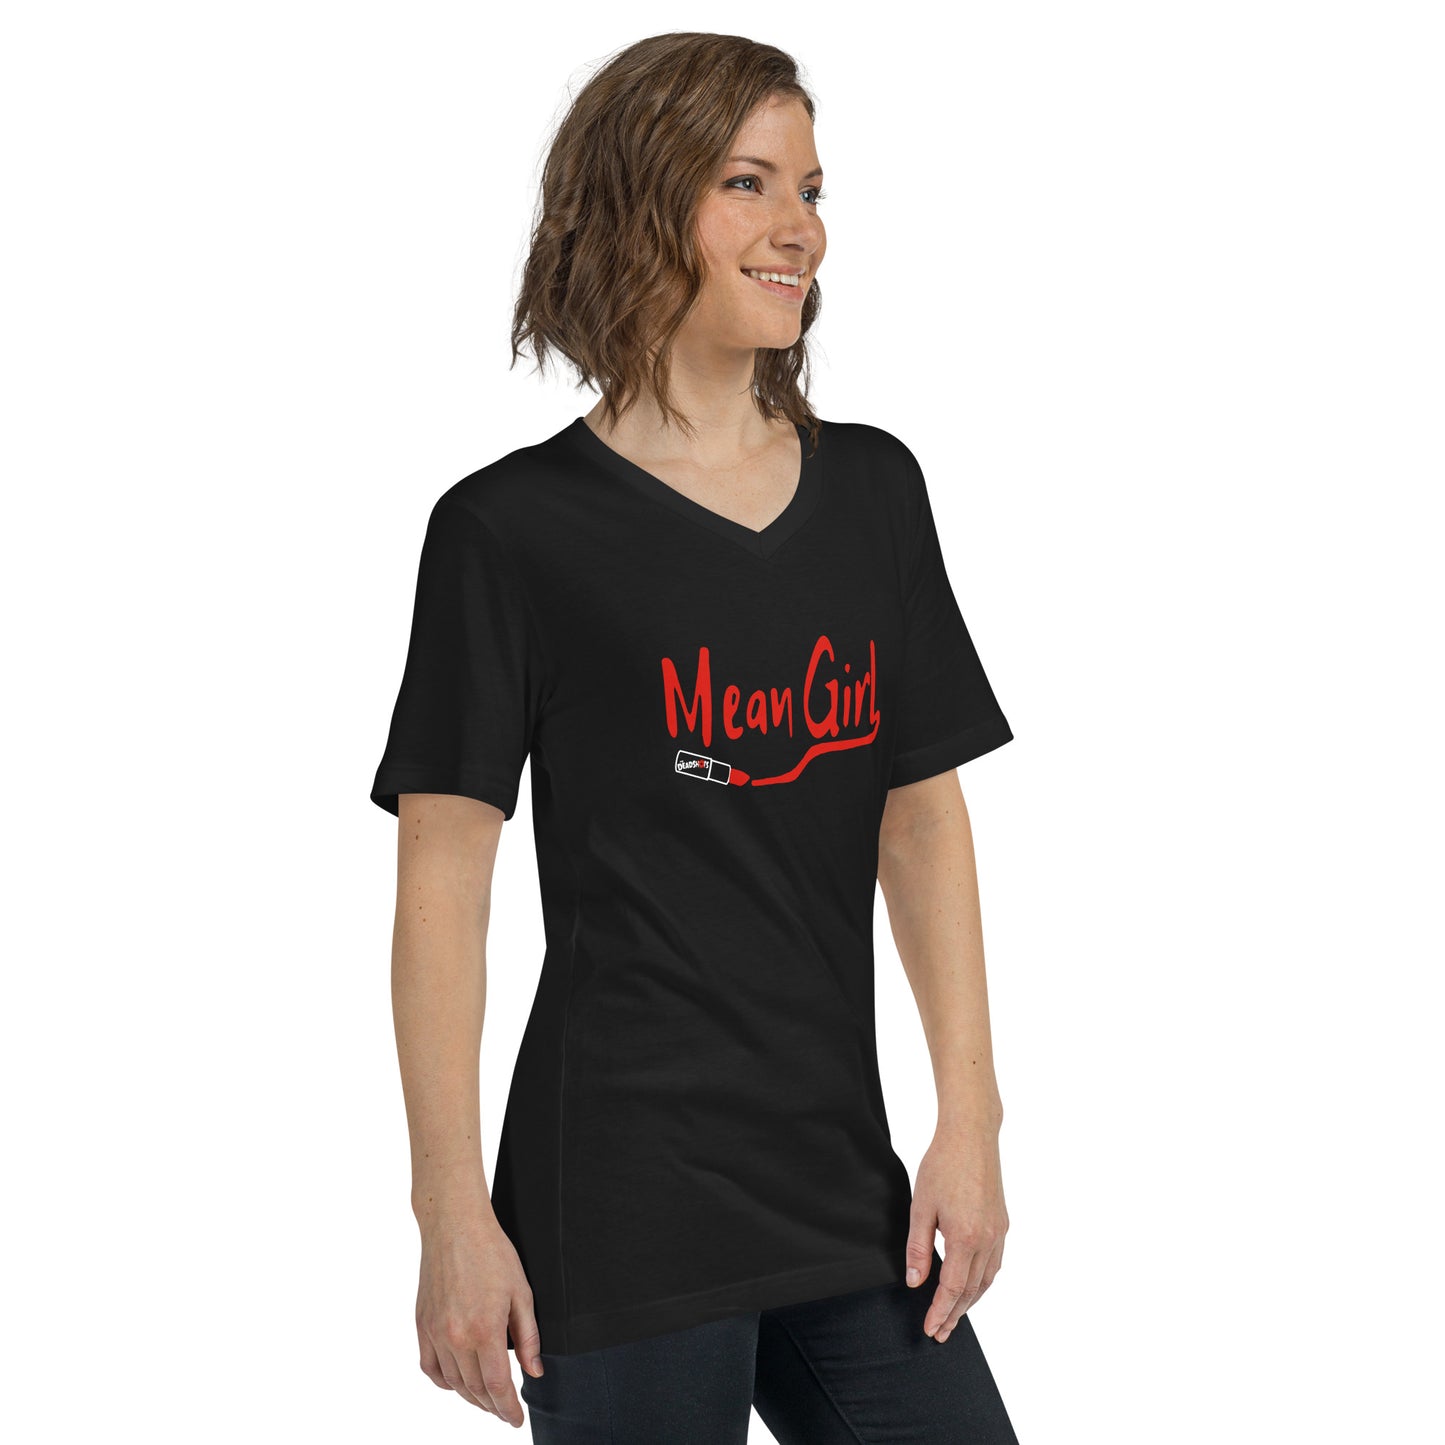 Mean Girl V-Neck T-Shirt